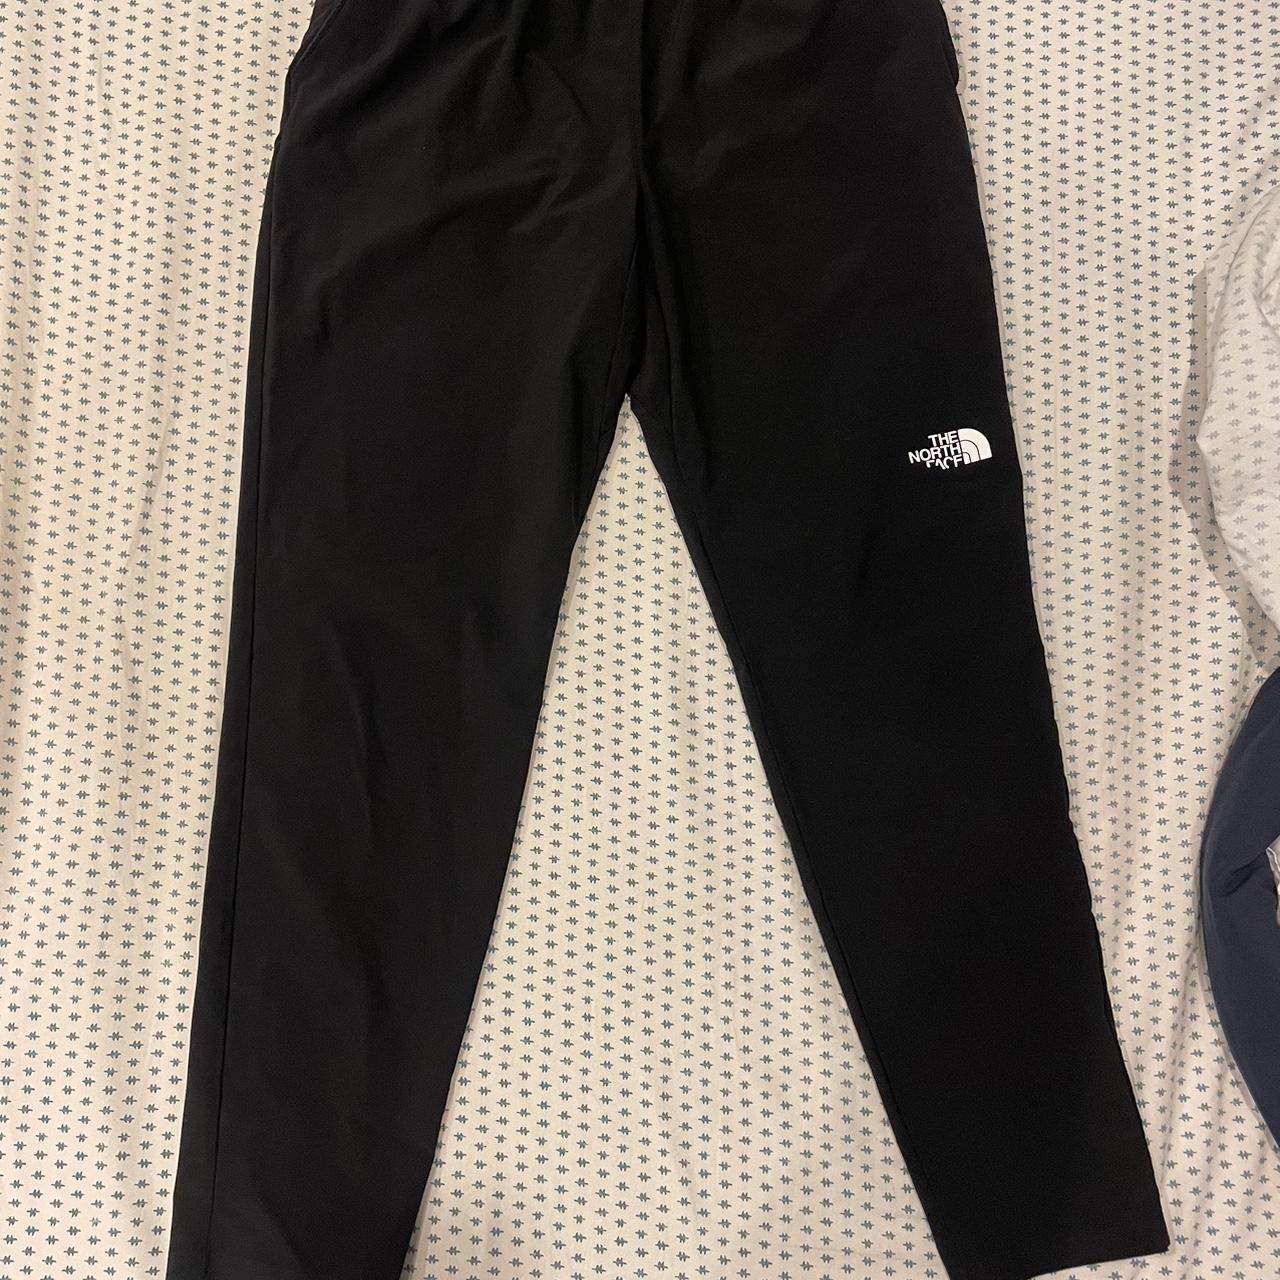 Water resistant running pants. Zipper pockets. Size... - Depop